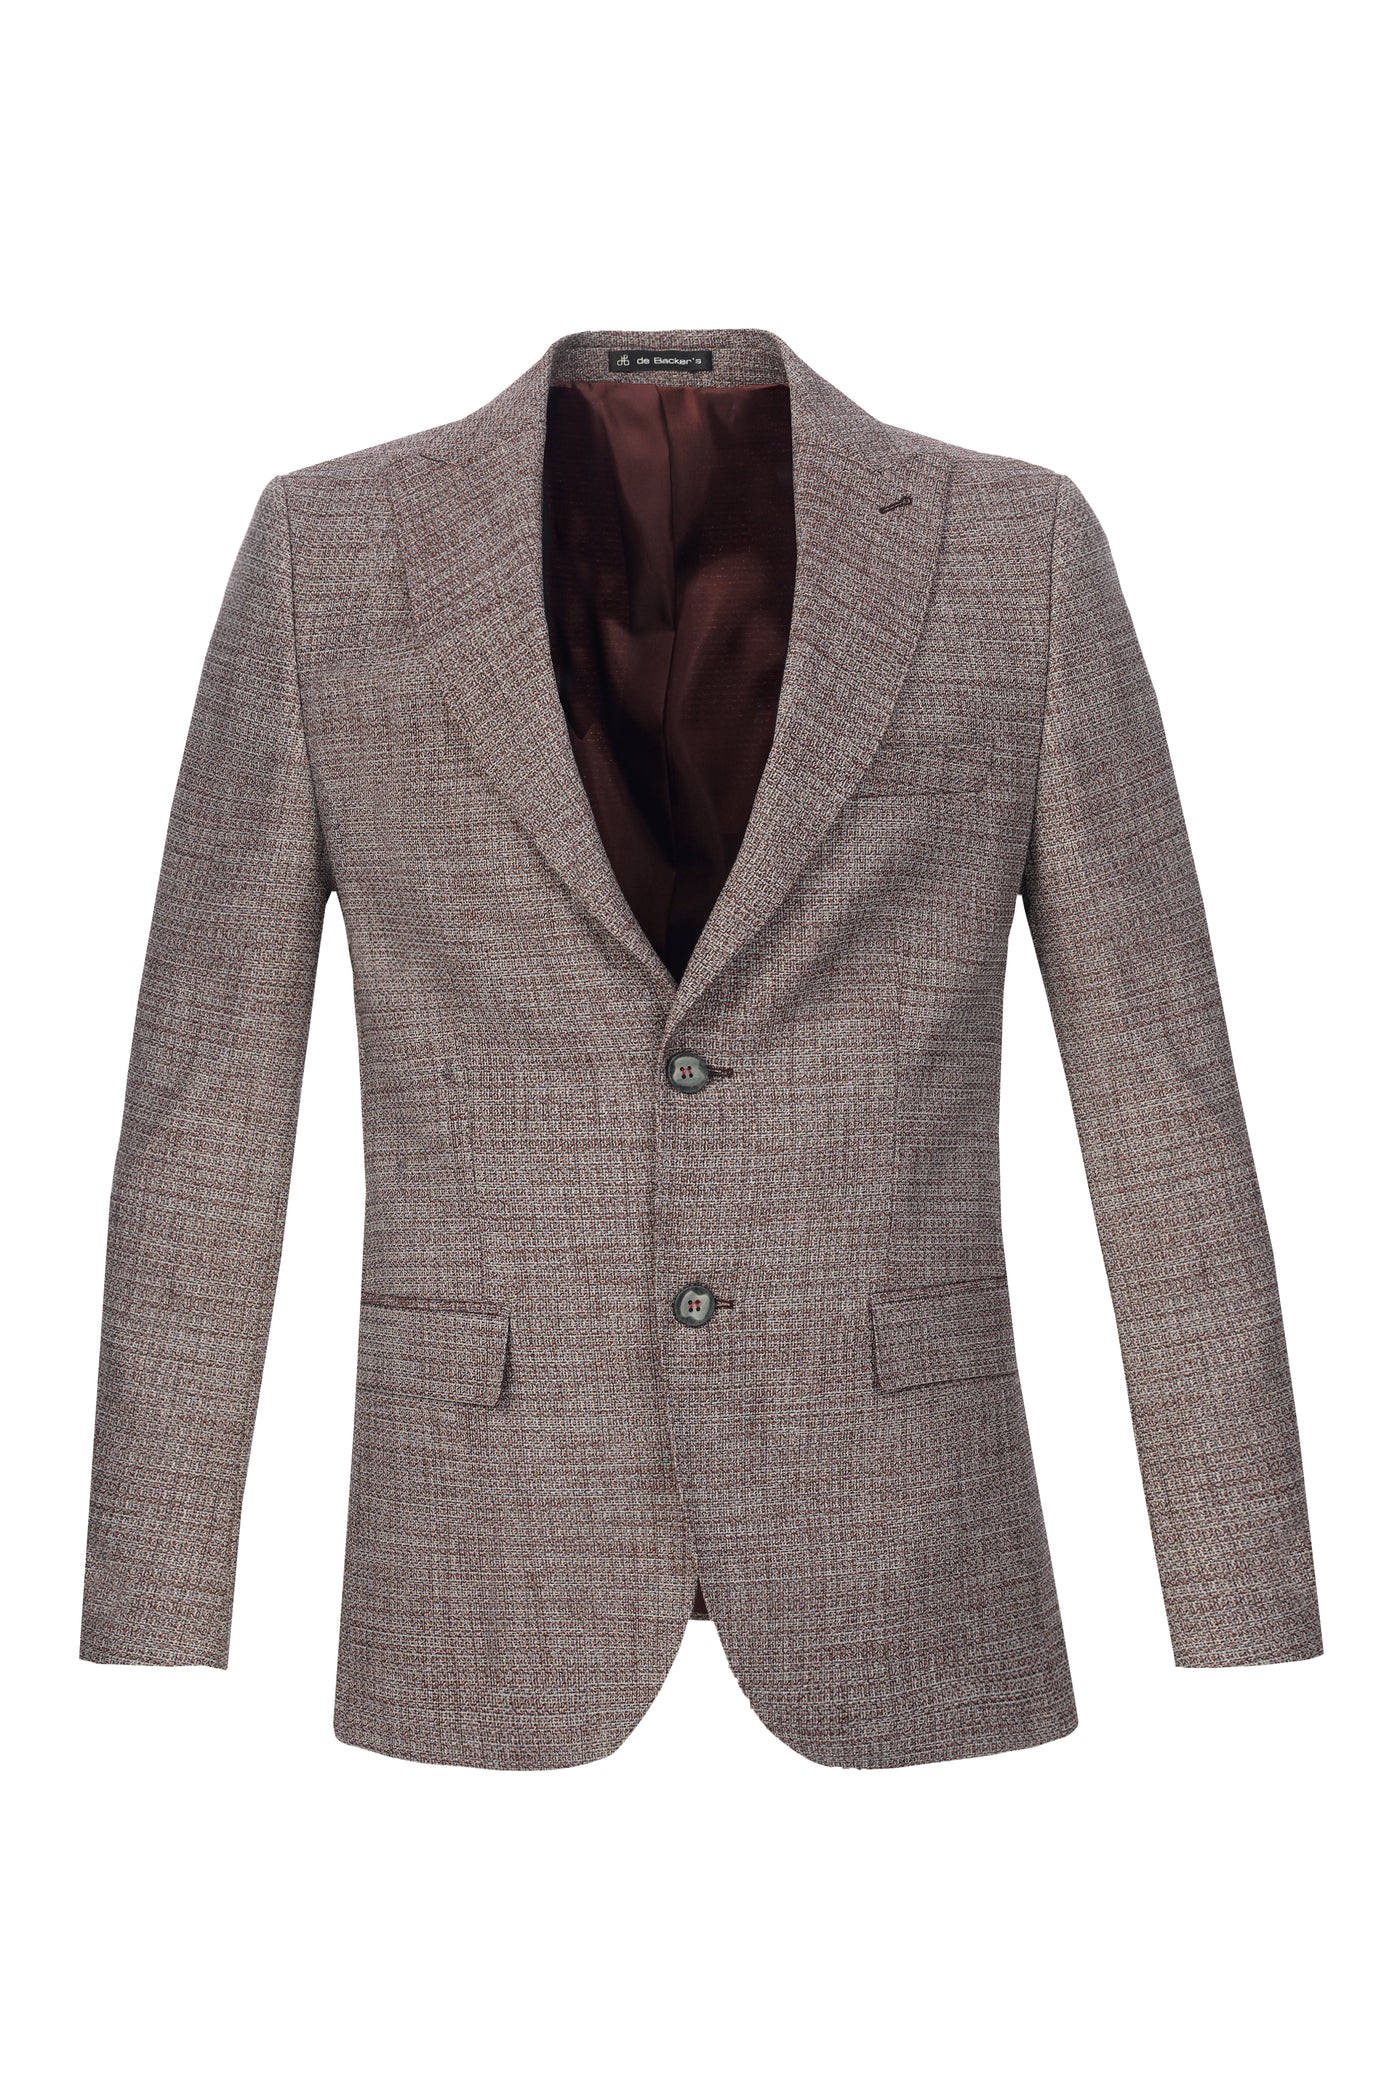 Jacquard Wool Knitted Peaked Lapel Crimson & Gray Blazer